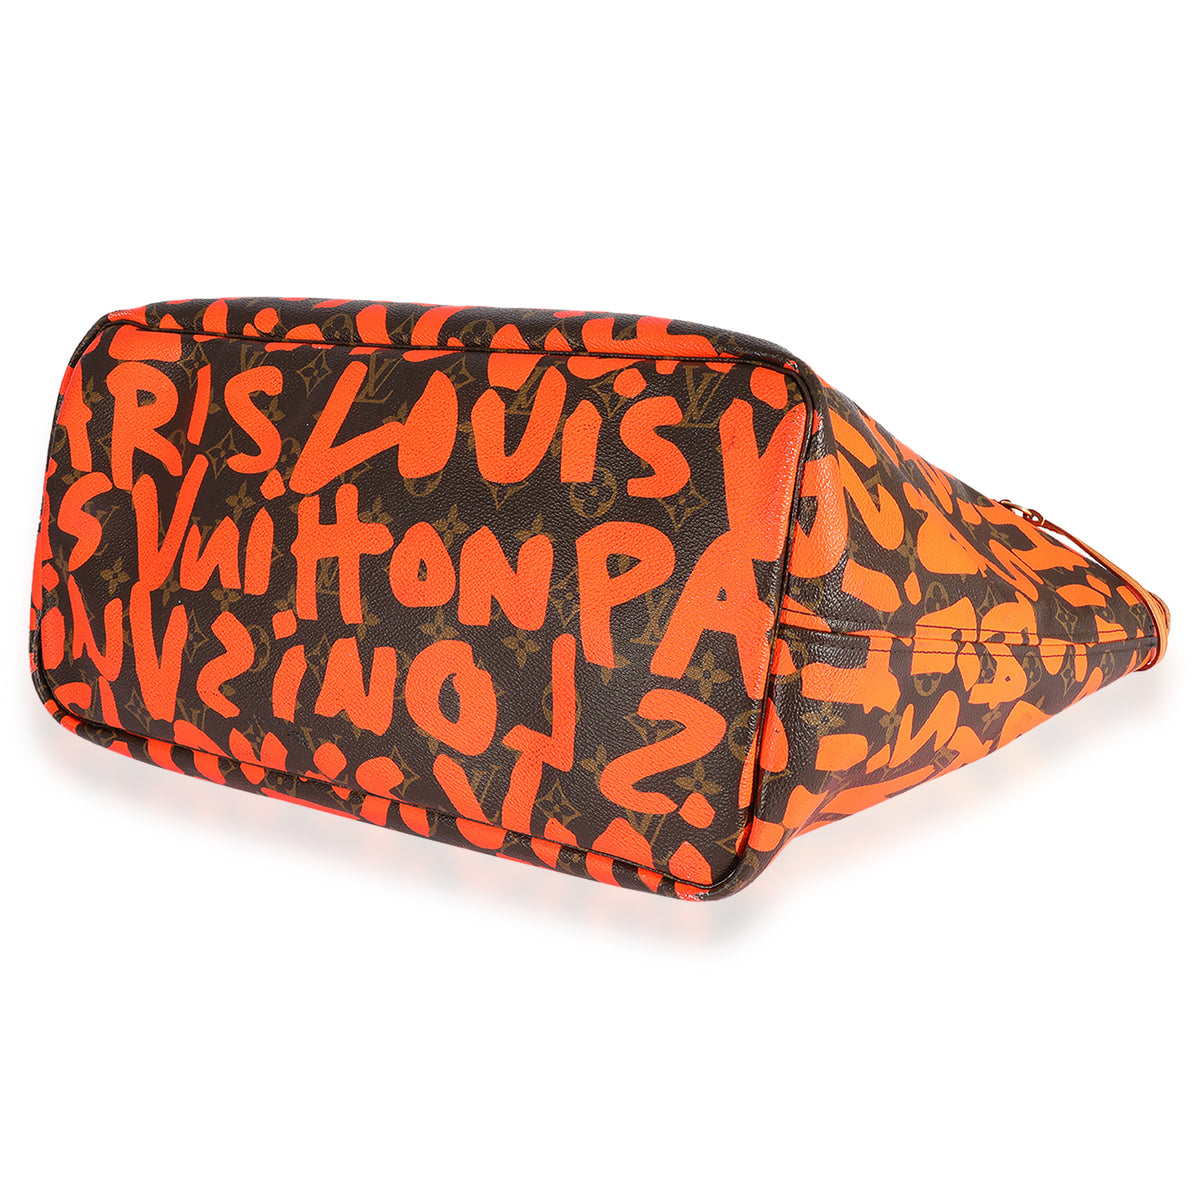 Louis Vuitton Stephen Sprouse Graffiti Neverfull GM - AWL2629